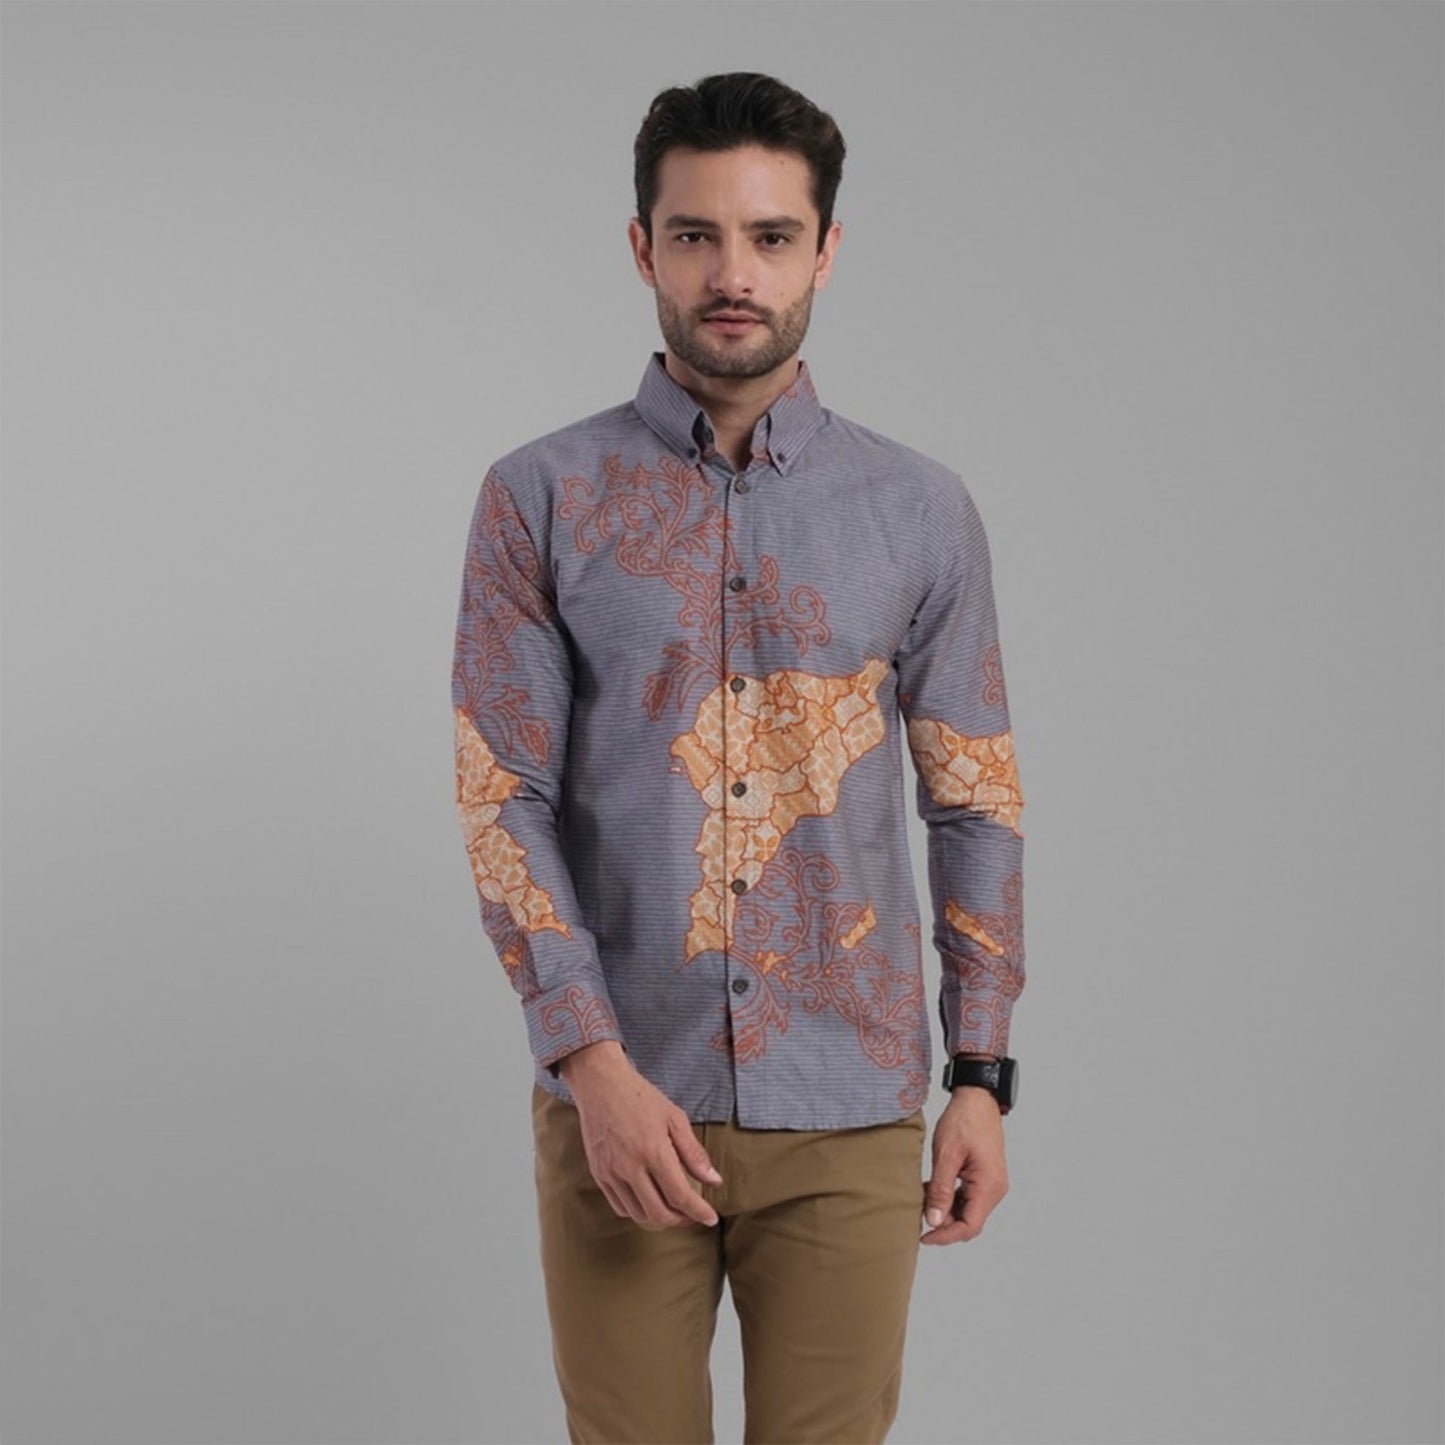 Slim Fit Long Sleeve Batik Shirt Embrace Timeless Elegance with this Exquisite Batik Shirt